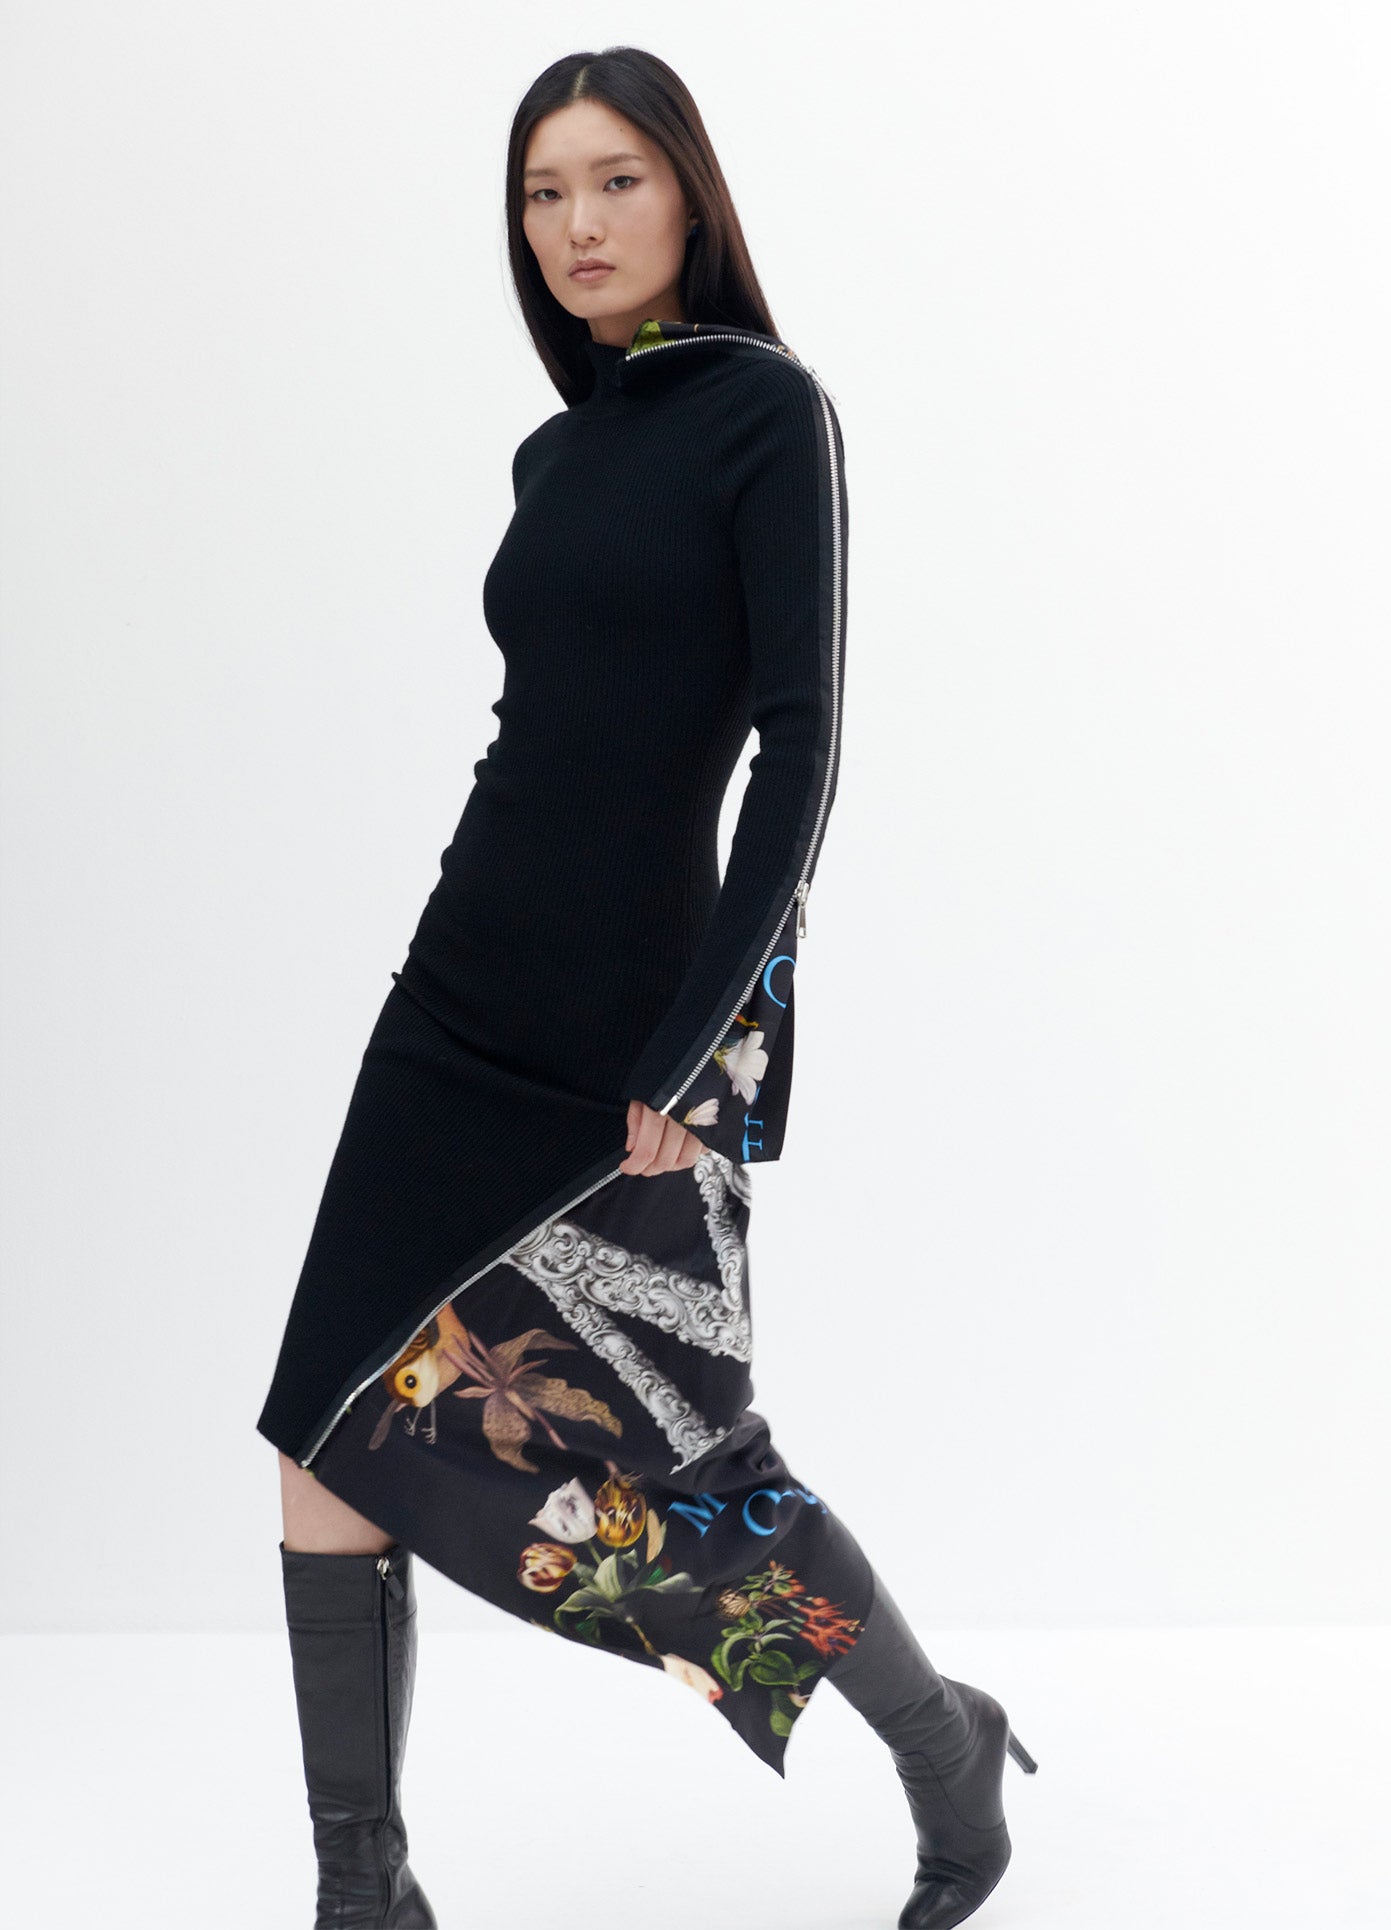 MONSE Long Sleeve Print Inset Zipper Detail Turtleneck Dress in Black Print on Model Walking Front View